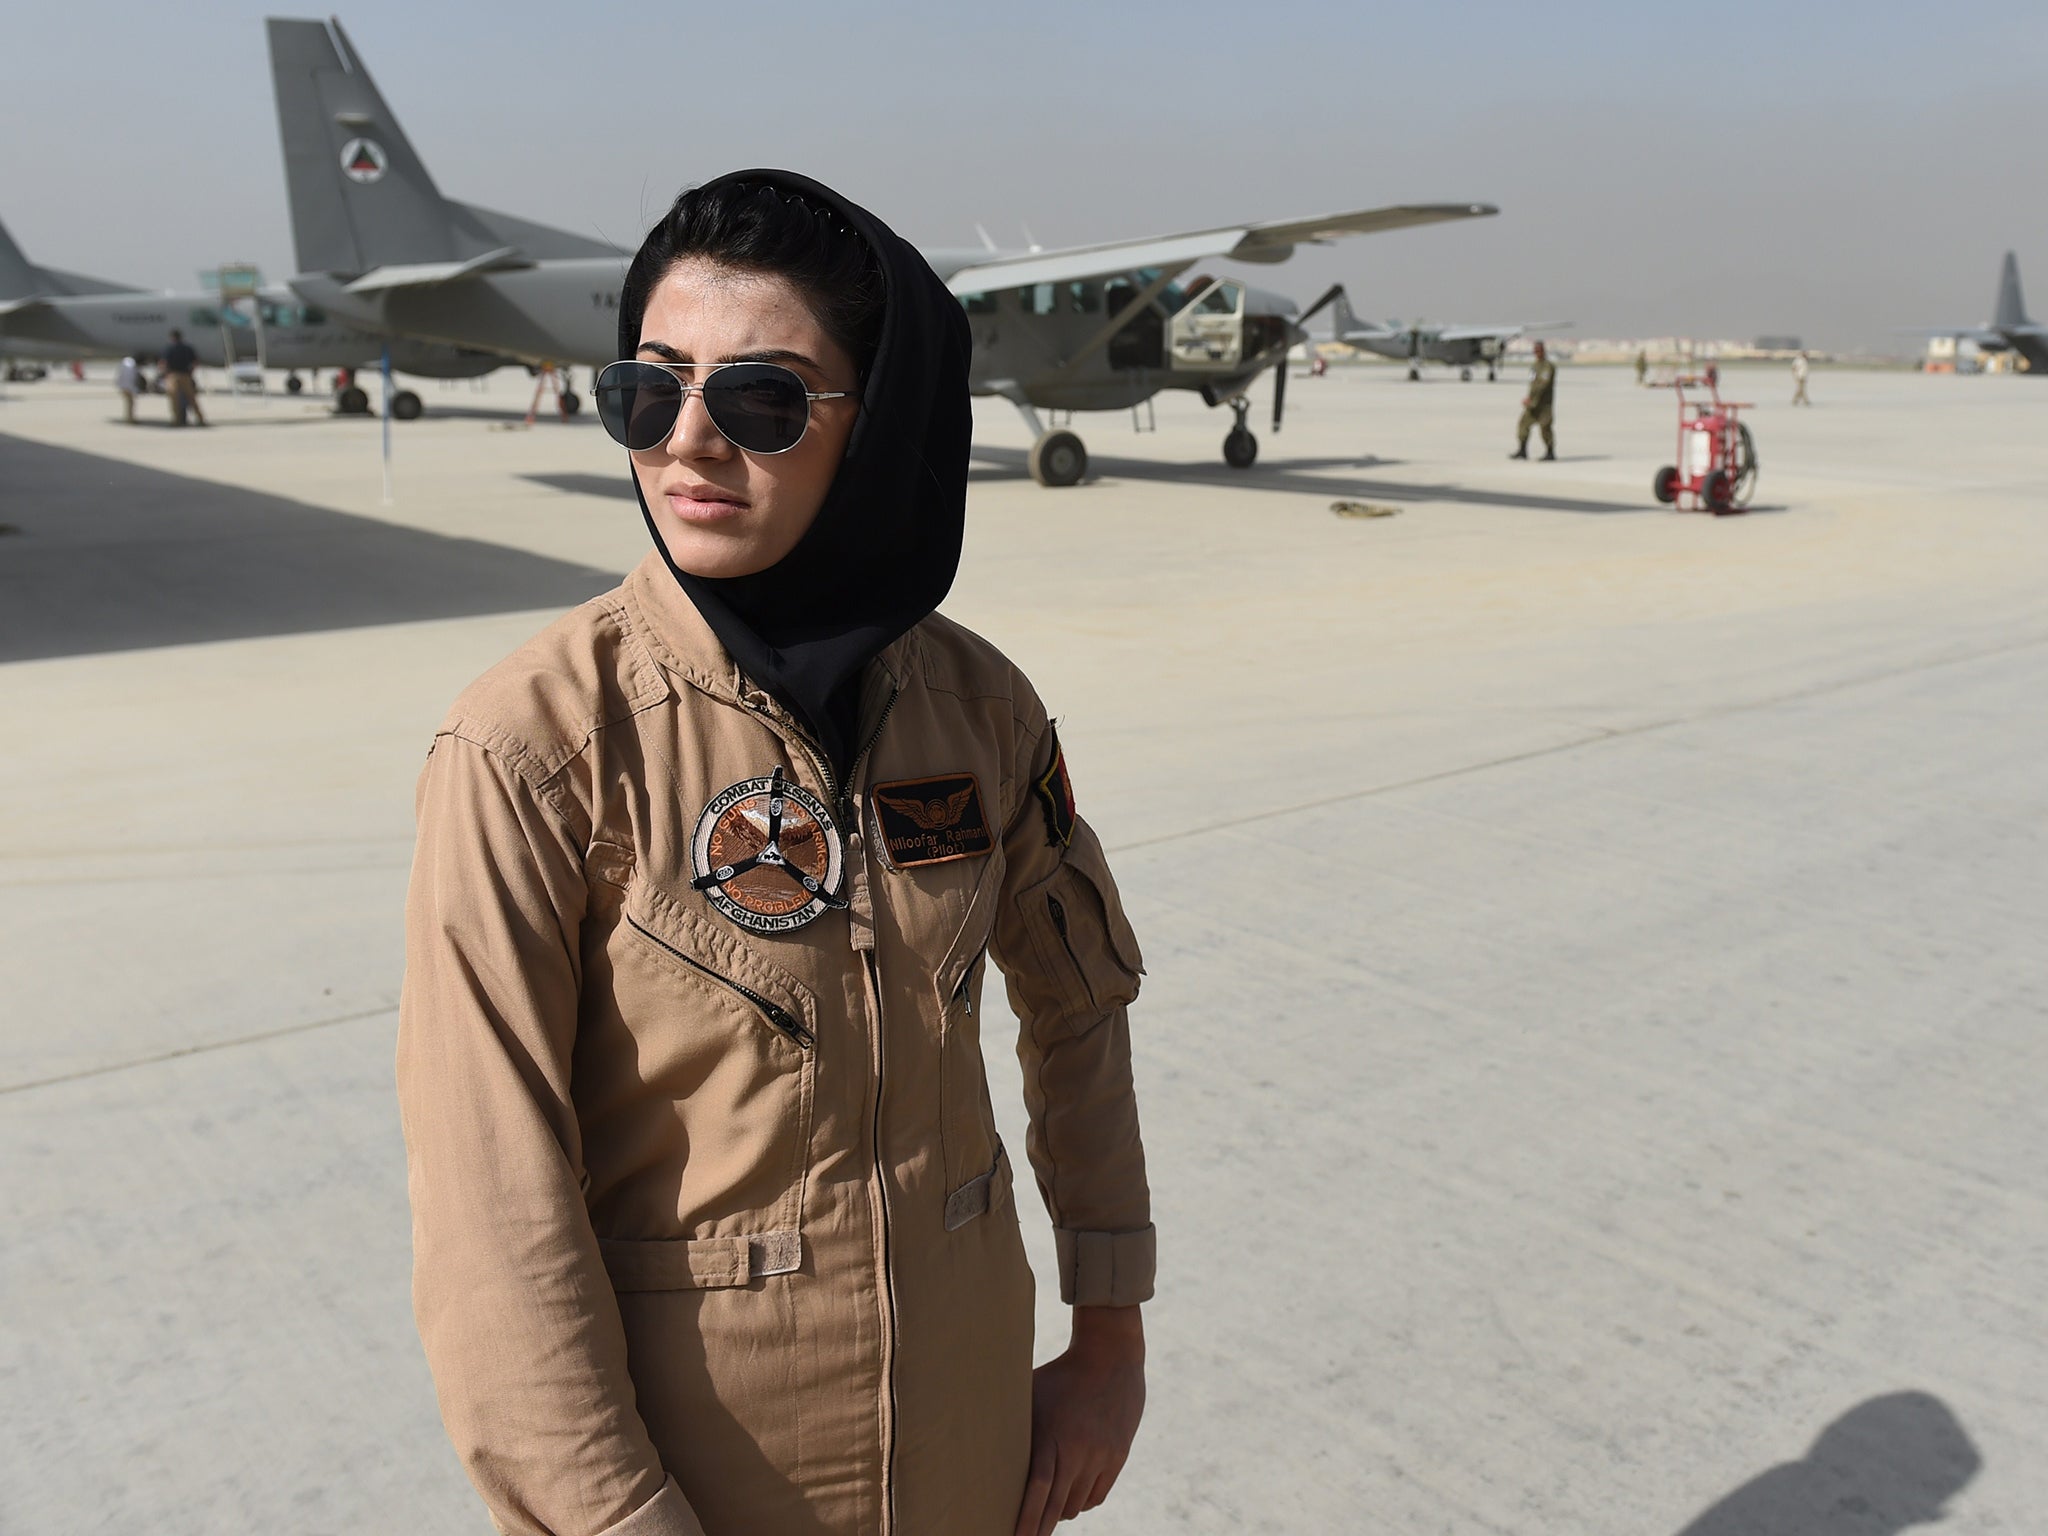 Afghanistan's first female pilot, Niloofar Rahmani